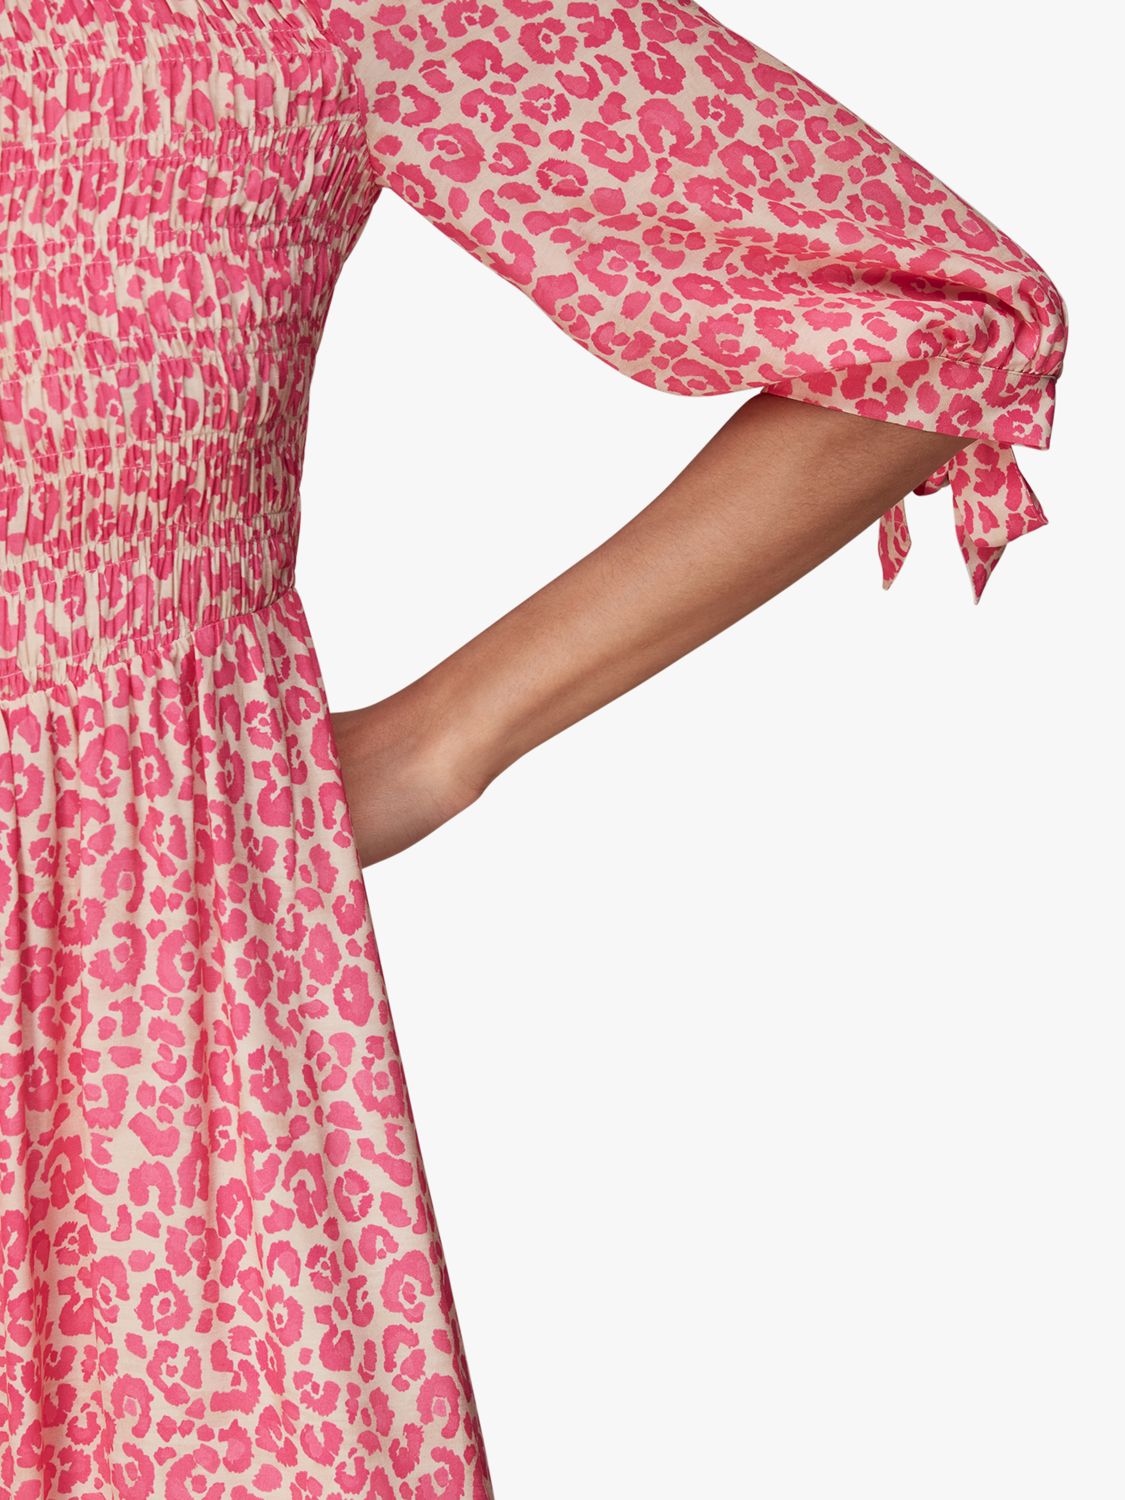 Whistles Cheetah Print Shirred Midi Dress, Pink/Multi, 12